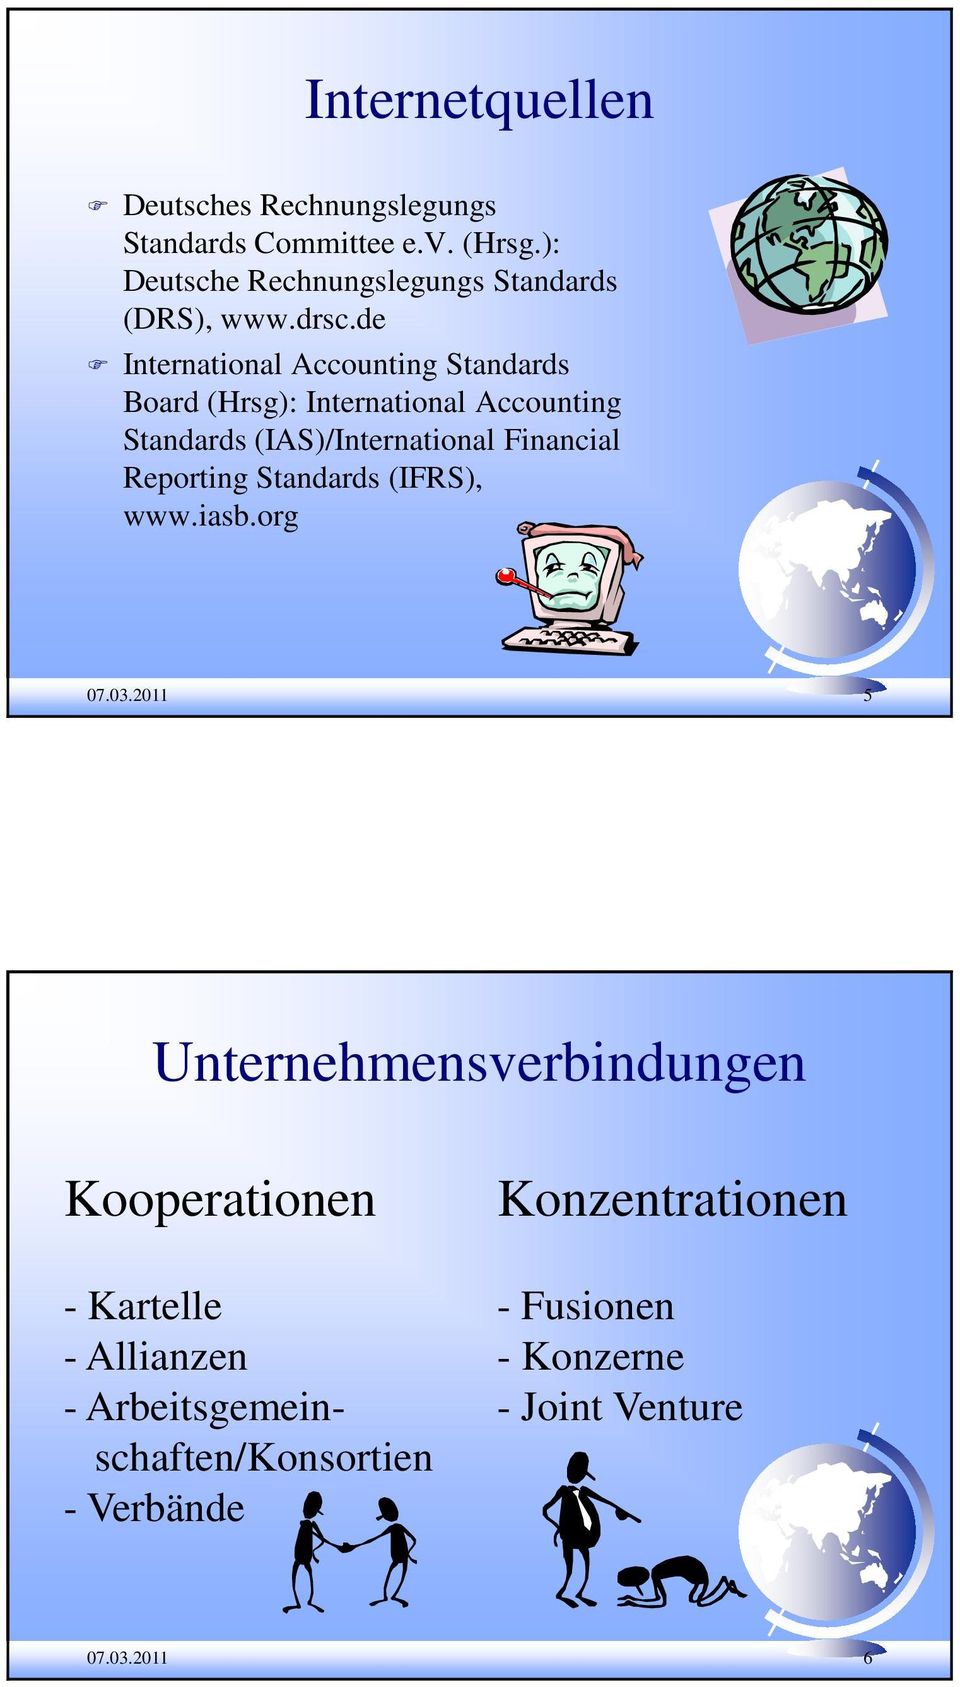 de International Accounting Standards Board (Hrsg): International Accounting Standards (IAS)/International Financial